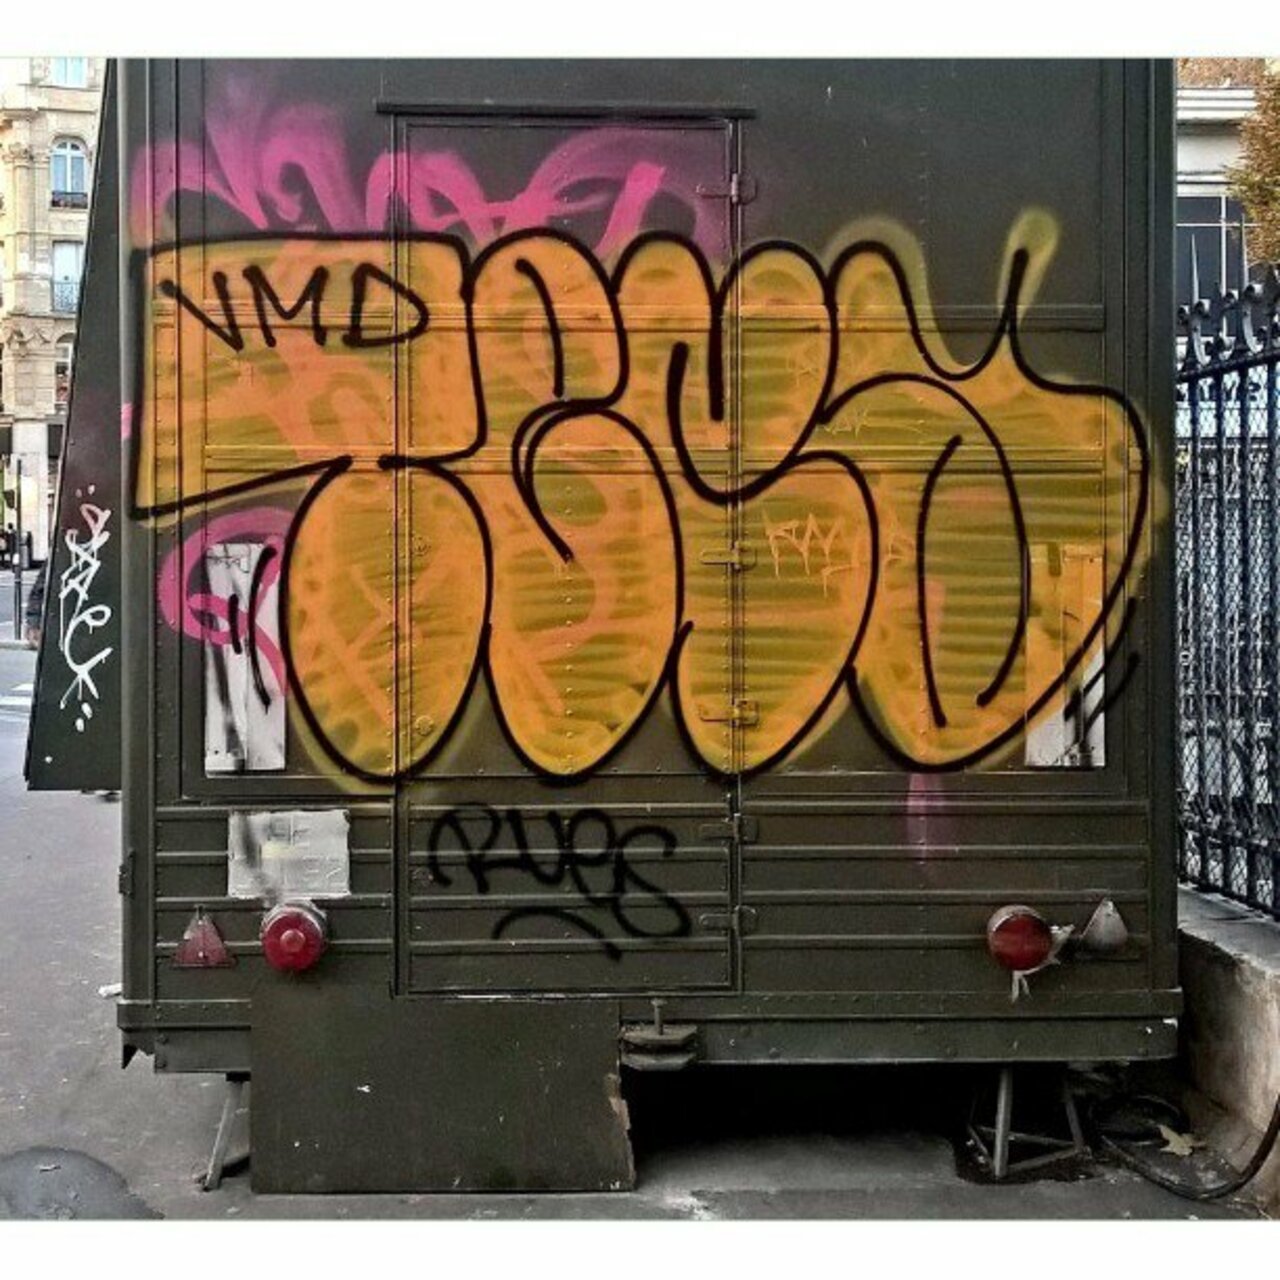 RT @StArtEverywhere: TERA
#streetart #graffiti #graff #art #fatcap #bombing #sprayart #spraycanart #wallart #handstyle #lettering #urban… https://t.co/KcannfyX01